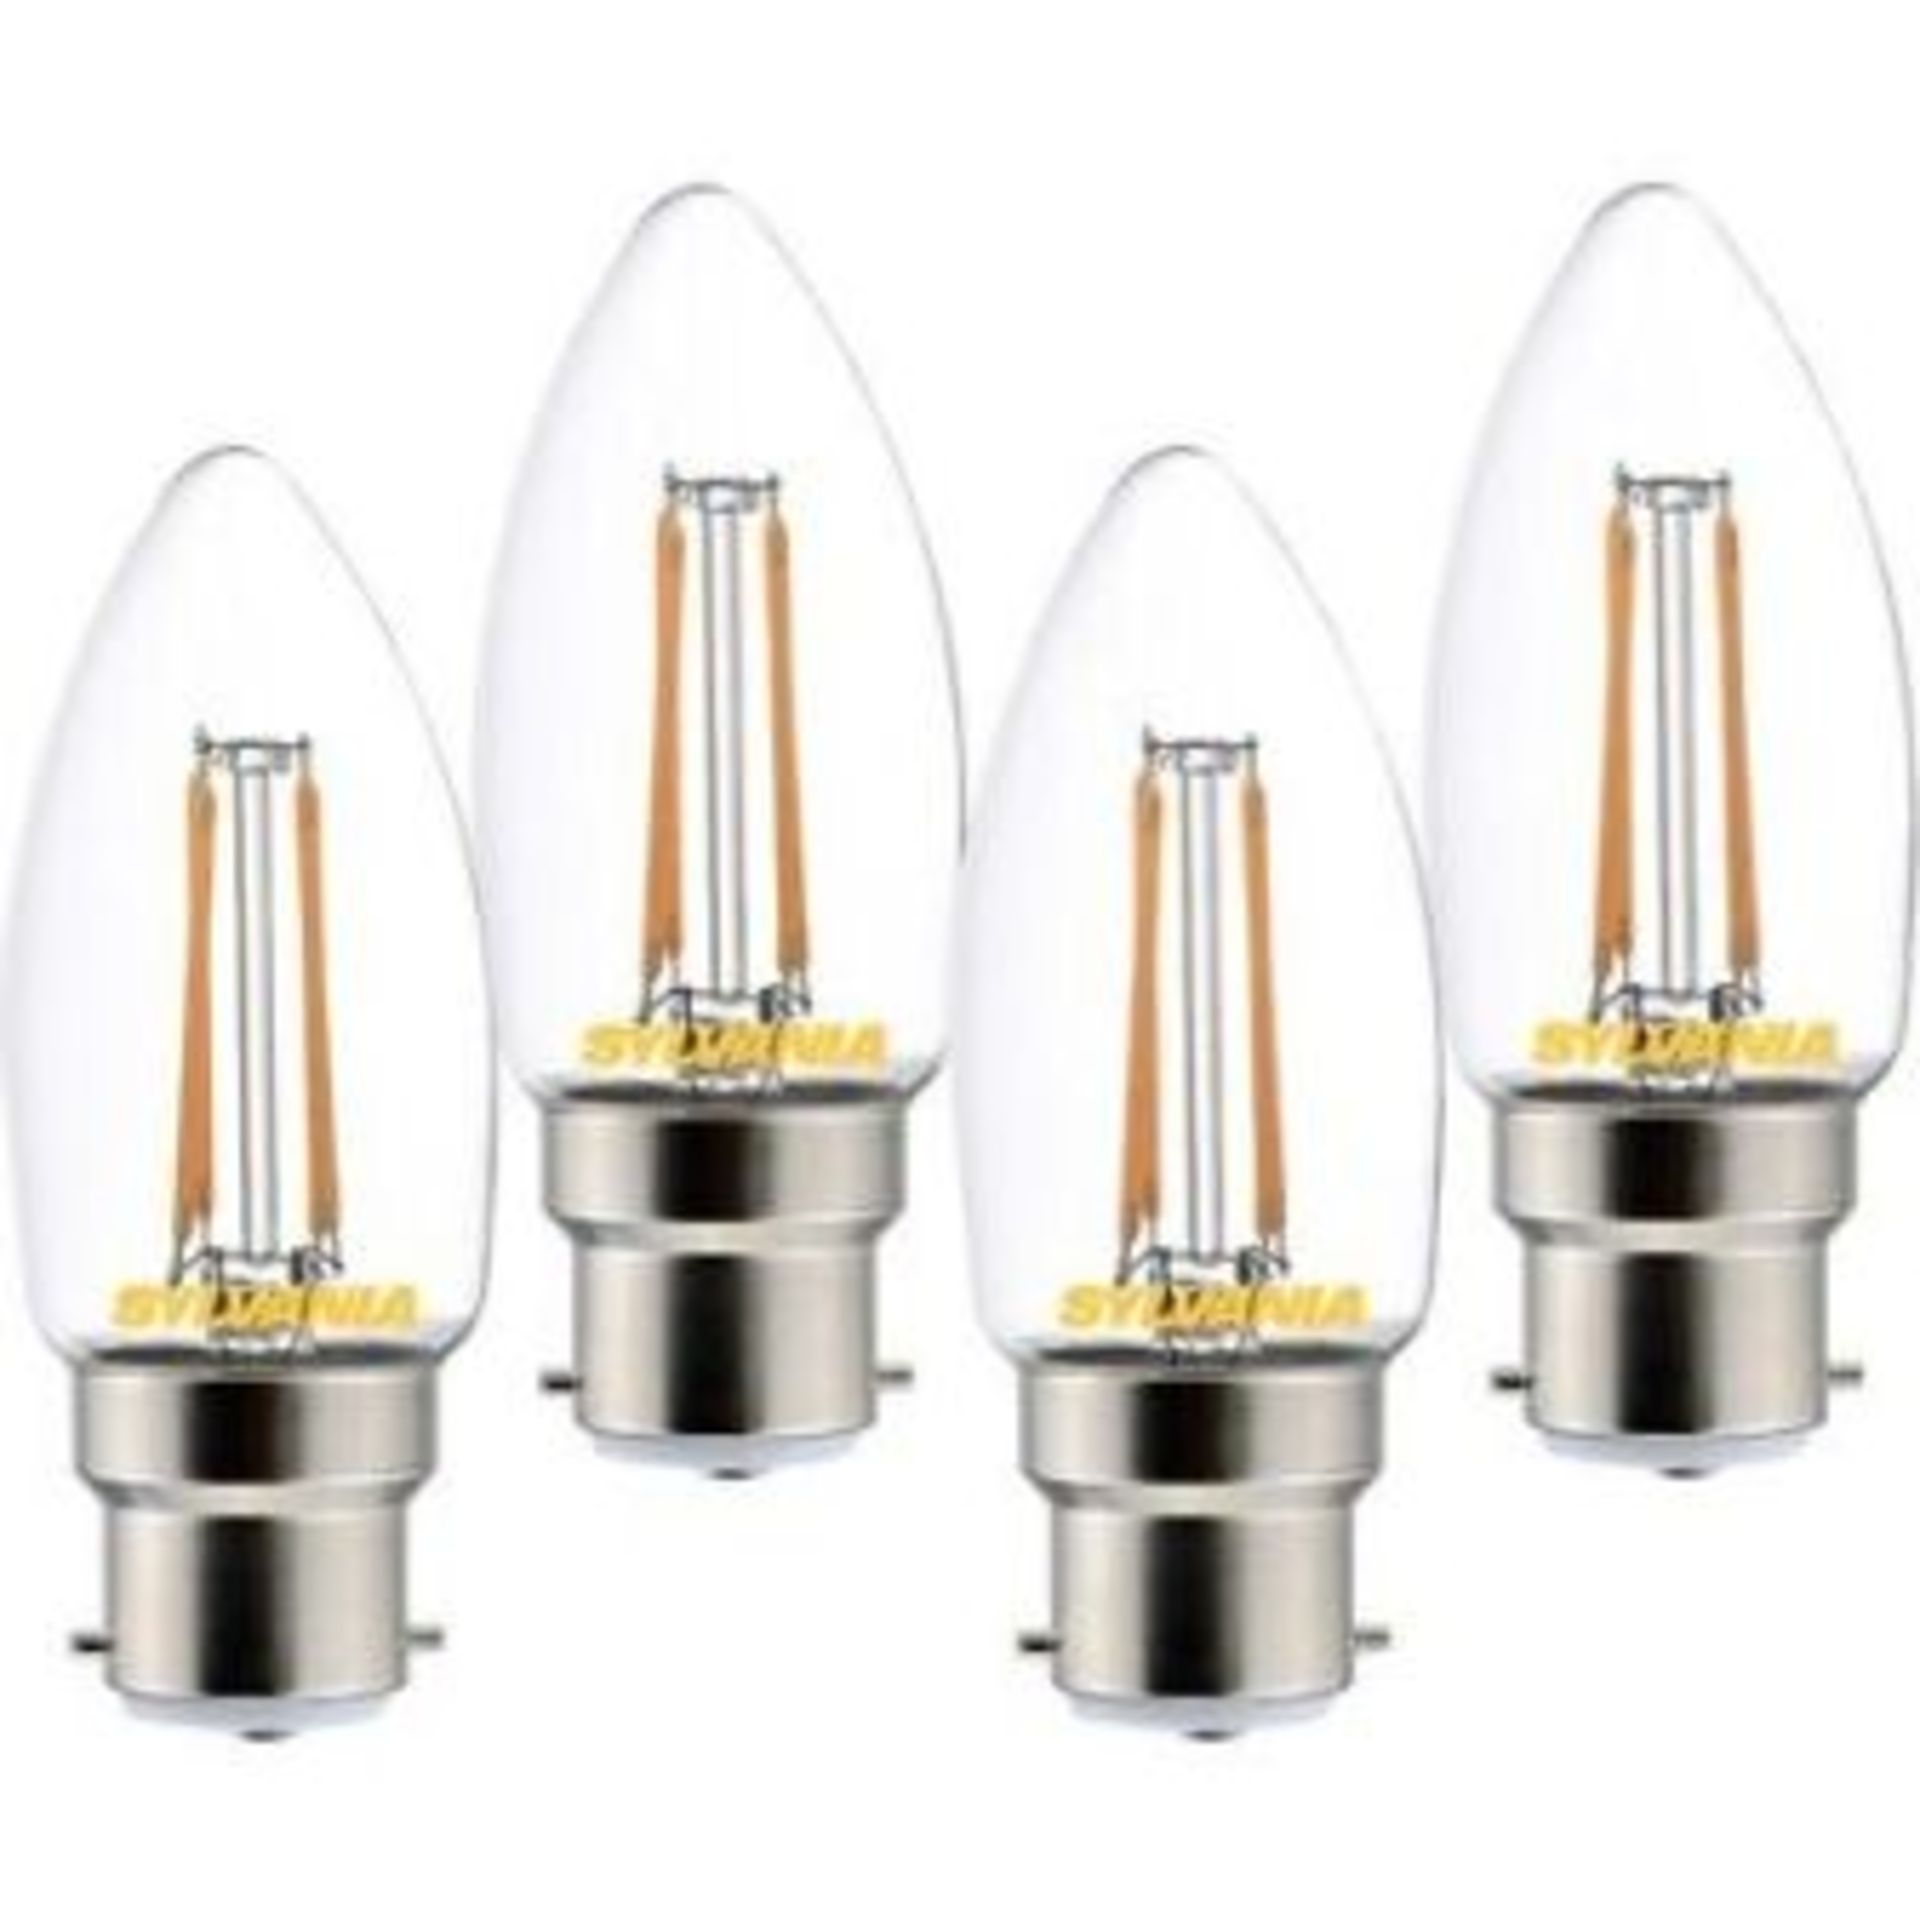 8X Sylvania LED Candle Lamps 4W